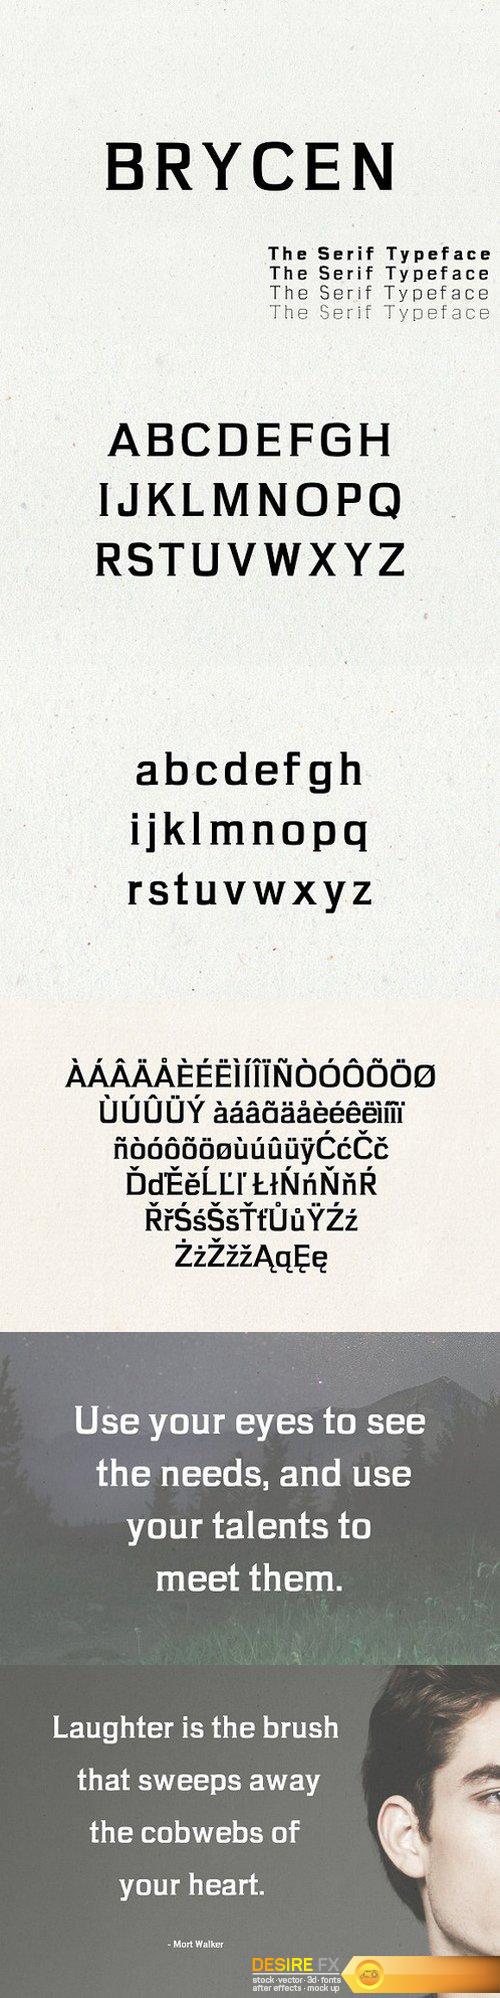 CM - Brycen Serif Premium Font Family 1728045